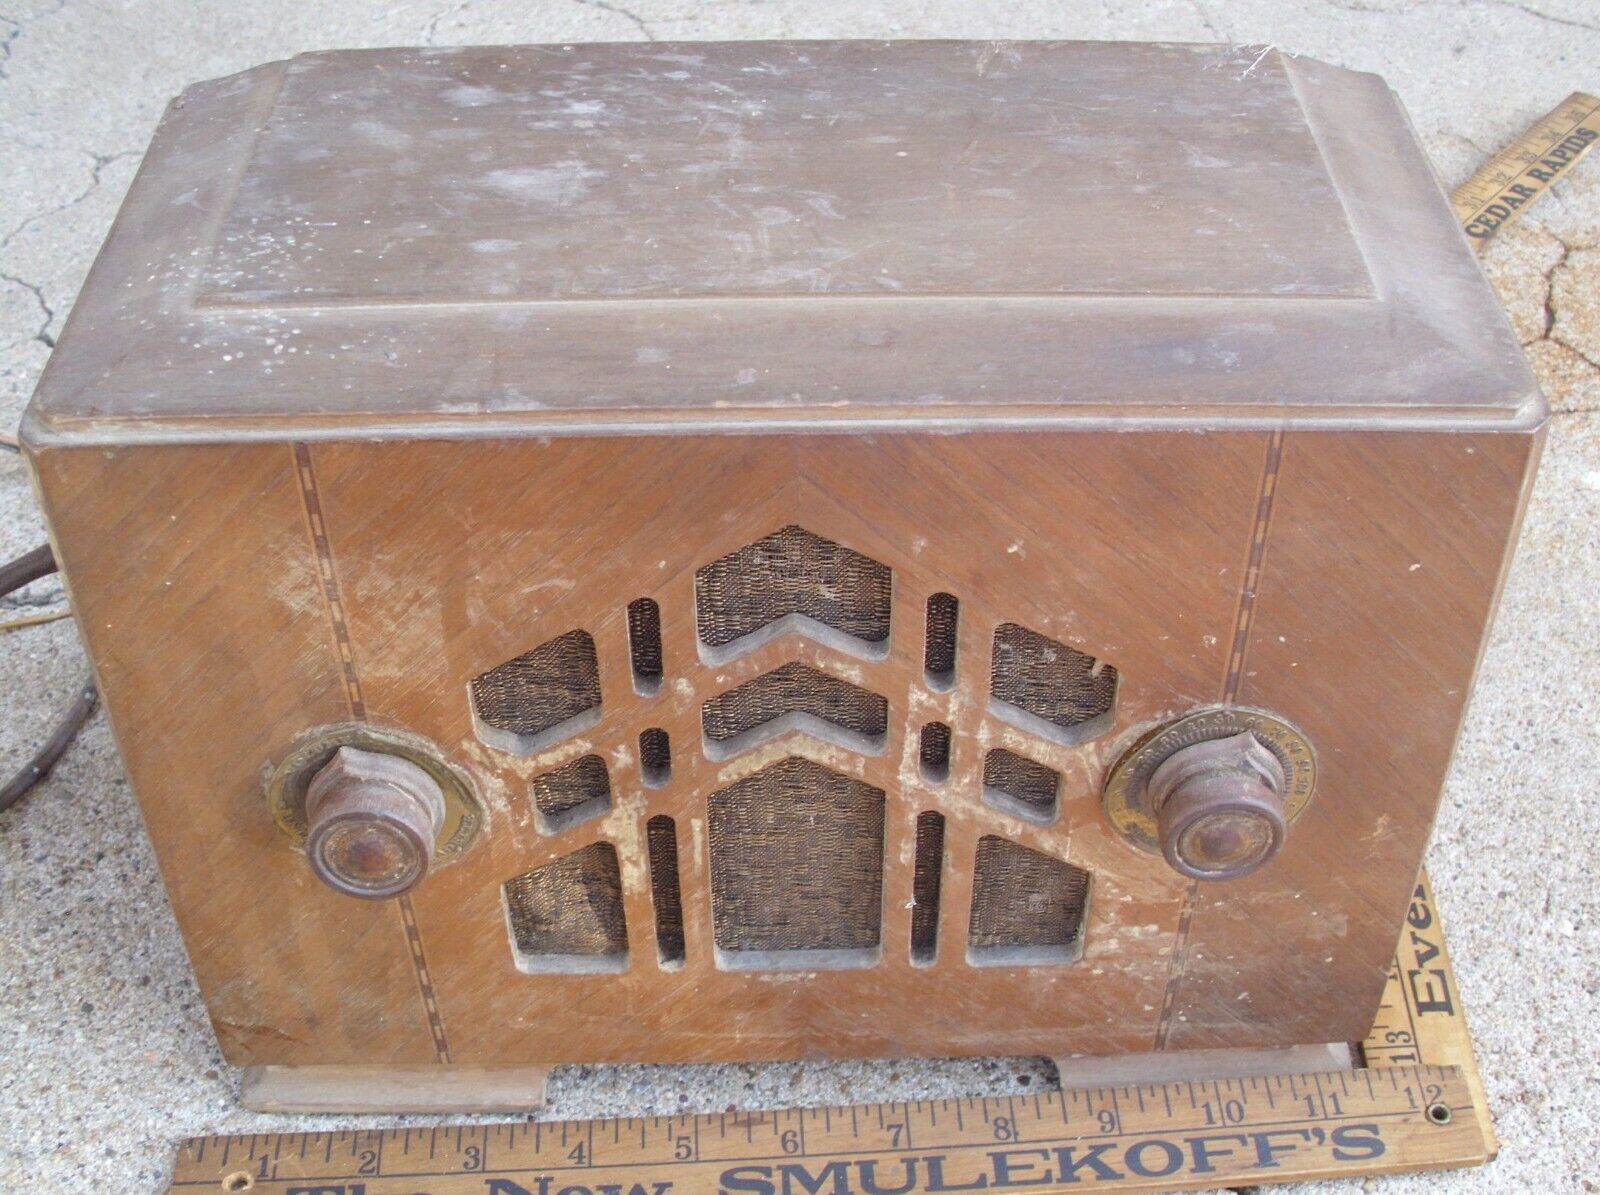 INTERANTIONAL RADIO CORP. KADETTE DECO WOOD TABLE MODEL TUBE RADIO 1930s